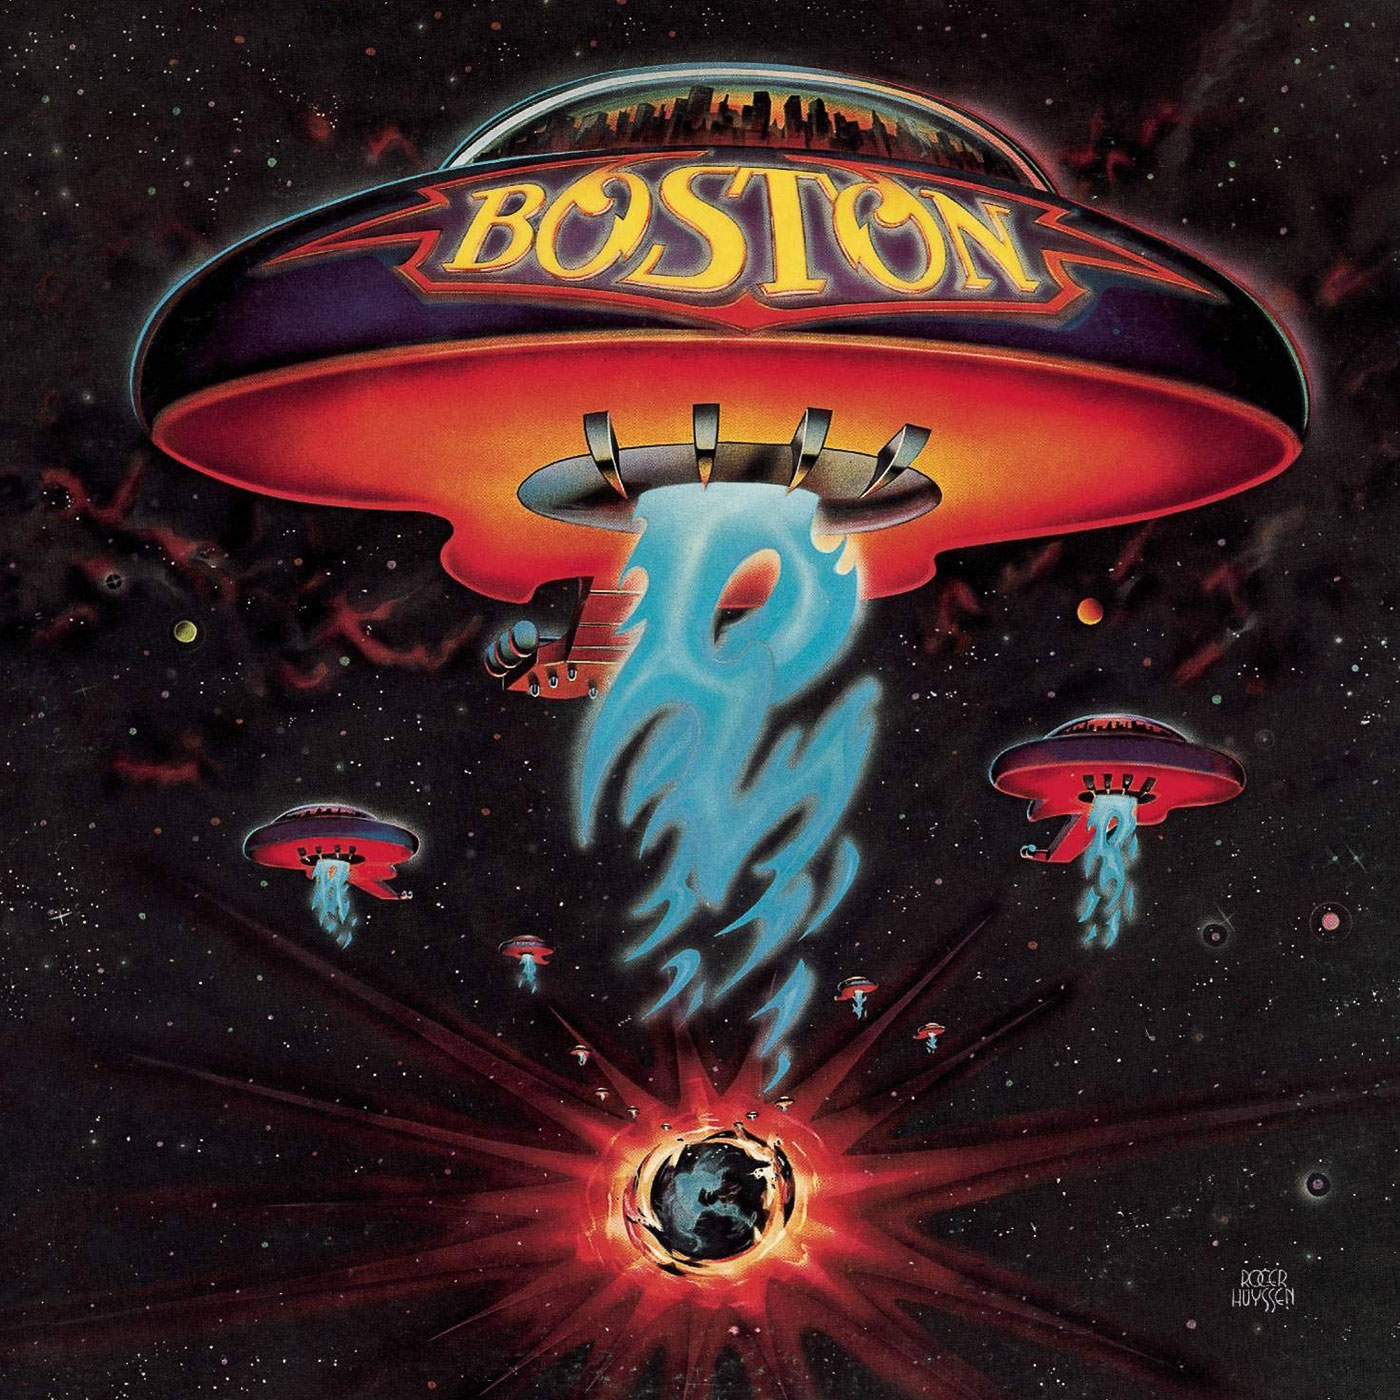 353 Boston – Boston